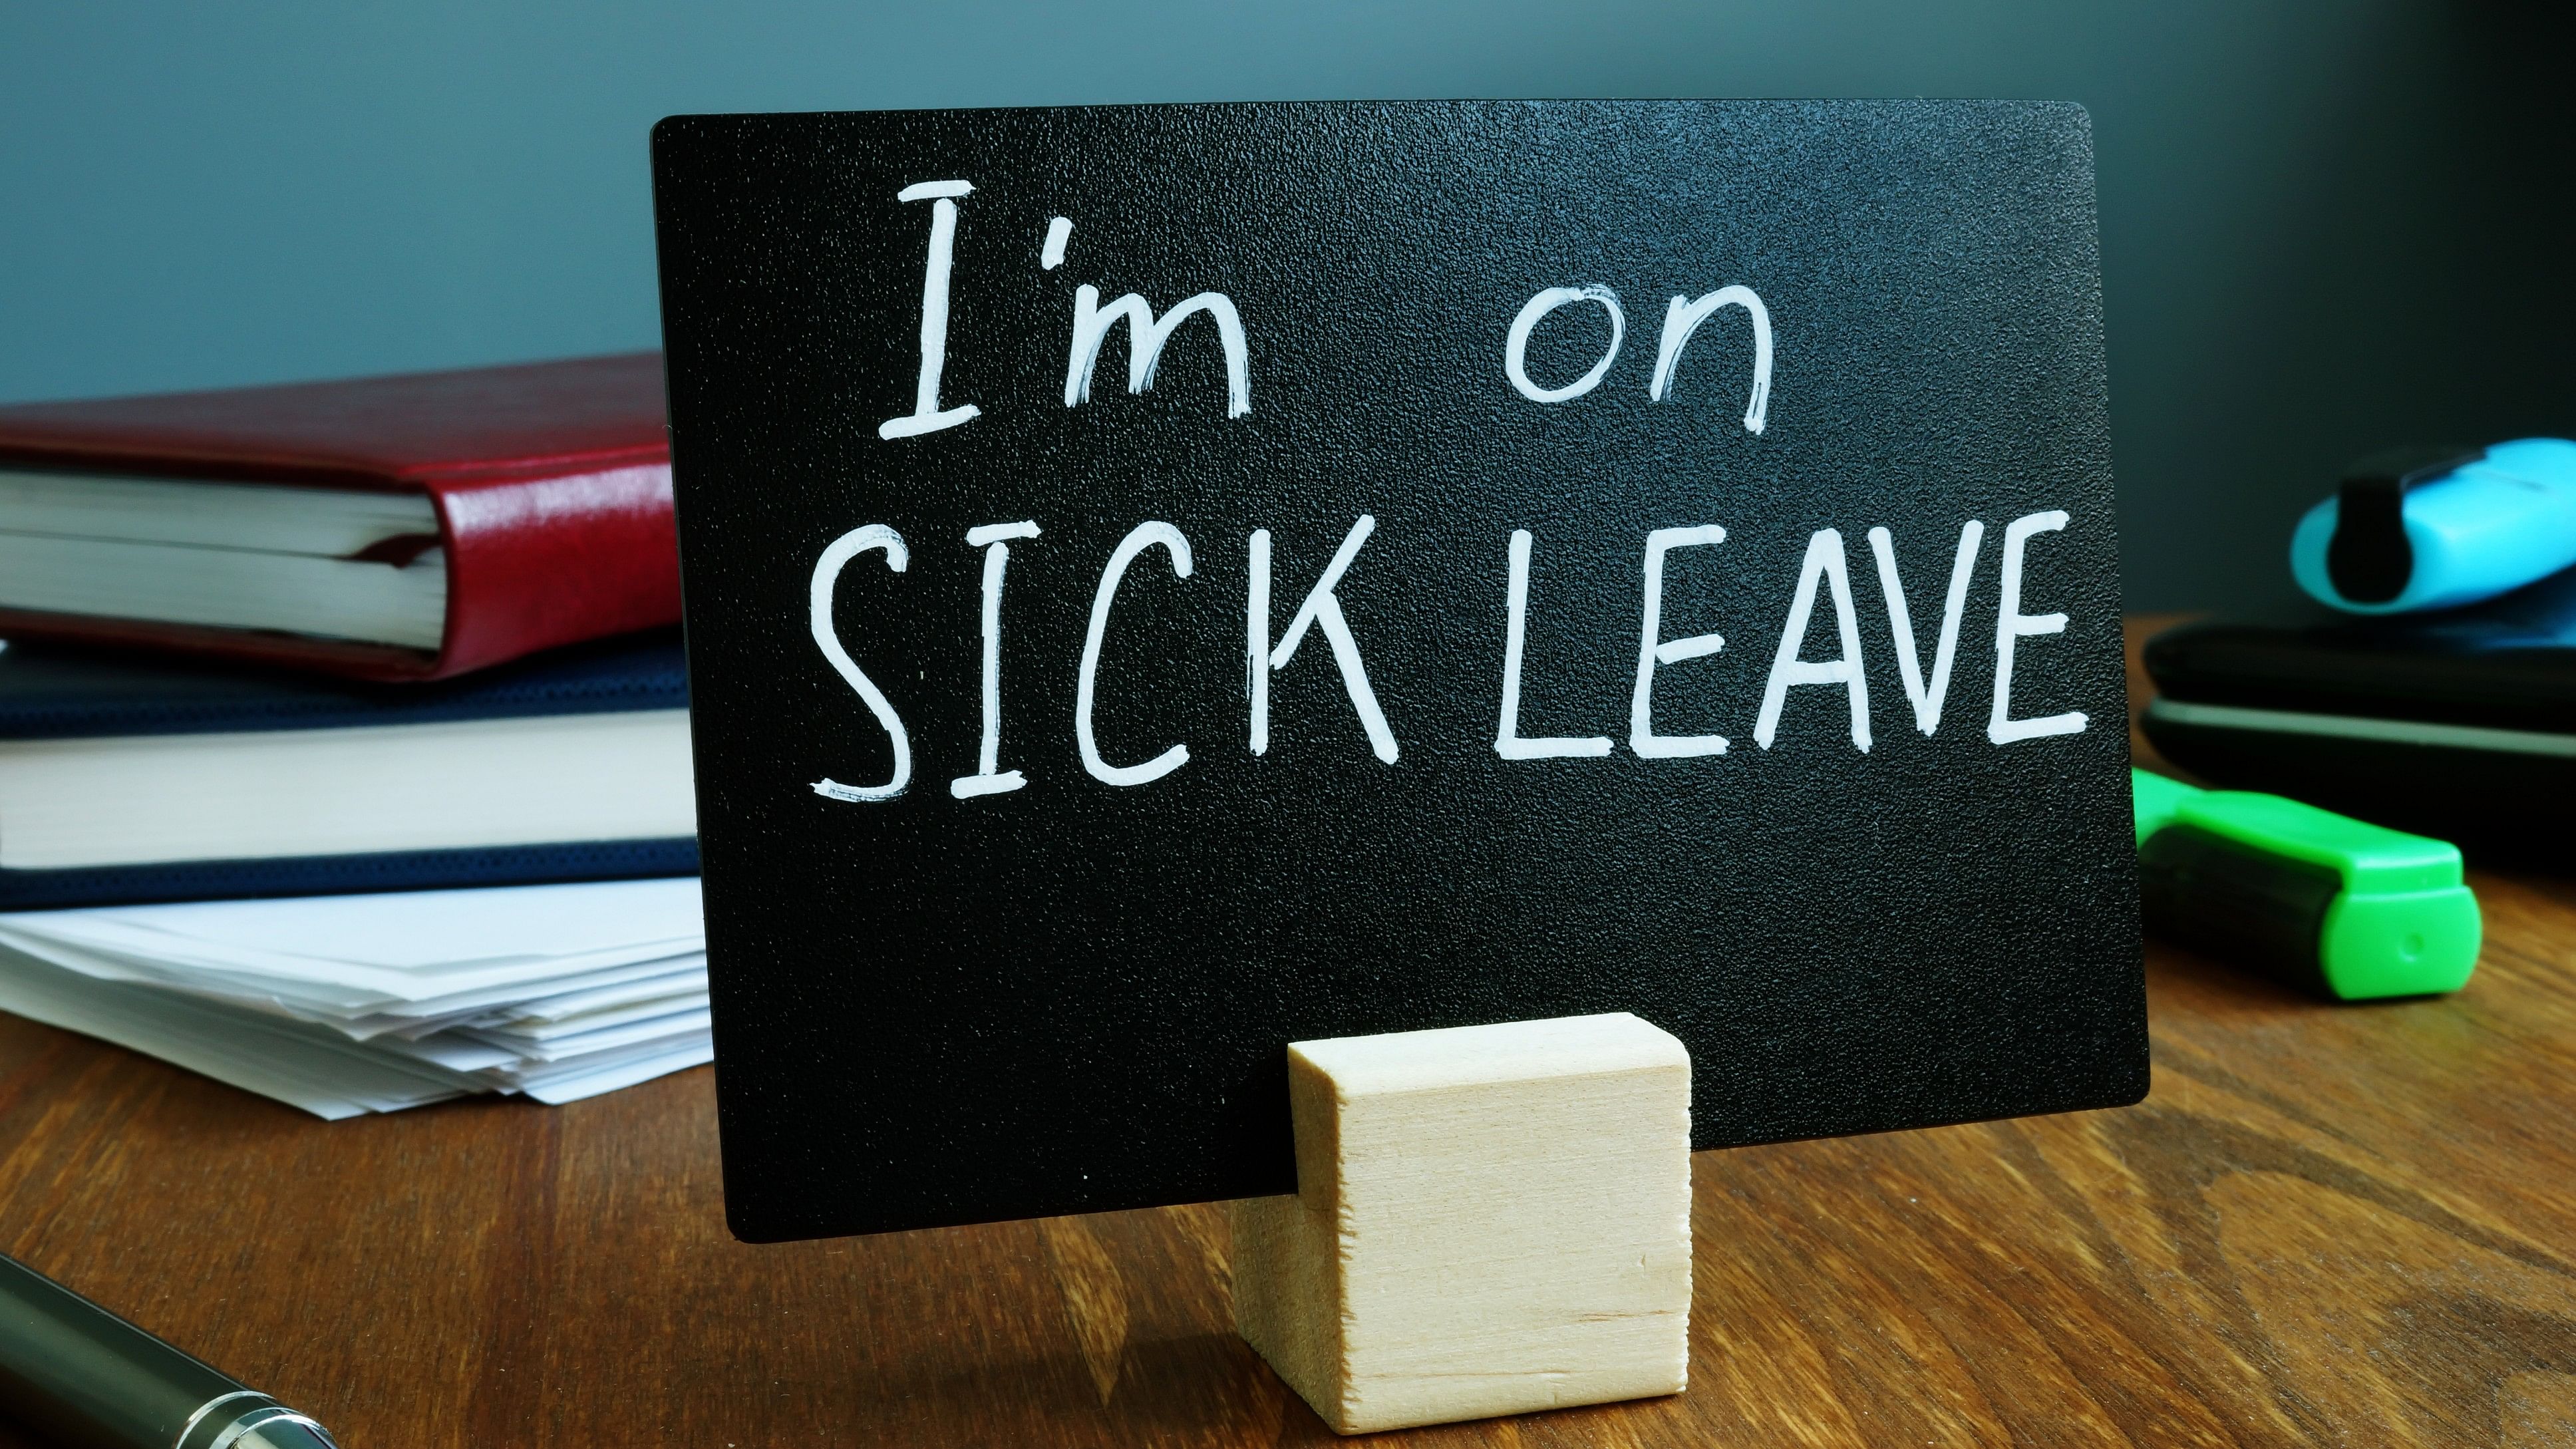 <div class="paragraphs"><p>A representative image of a sick leave sign.</p></div>